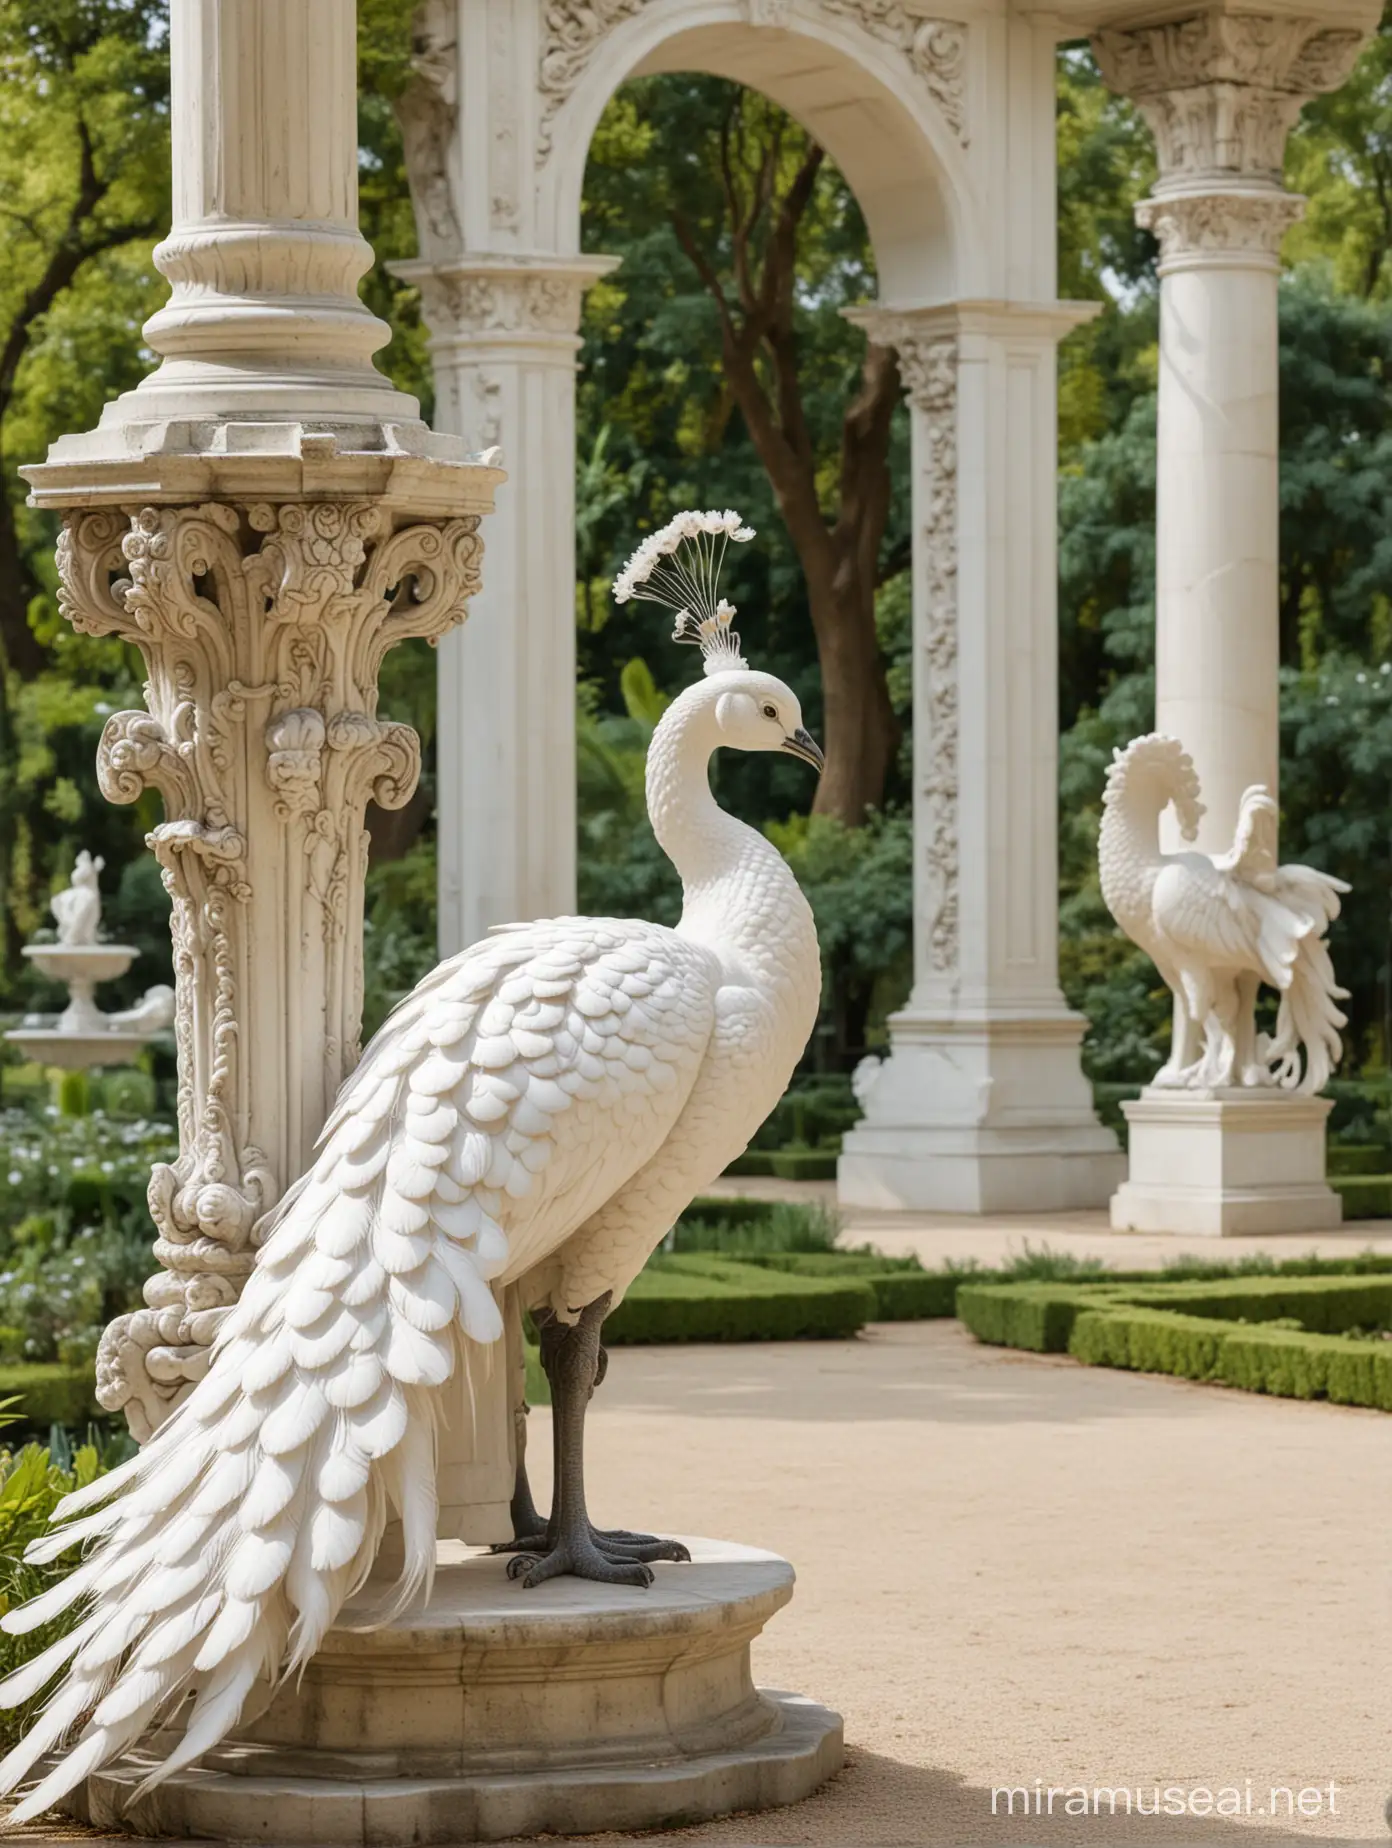 Elegant White Peacock Displaying Its Plumage in Baroque Garden